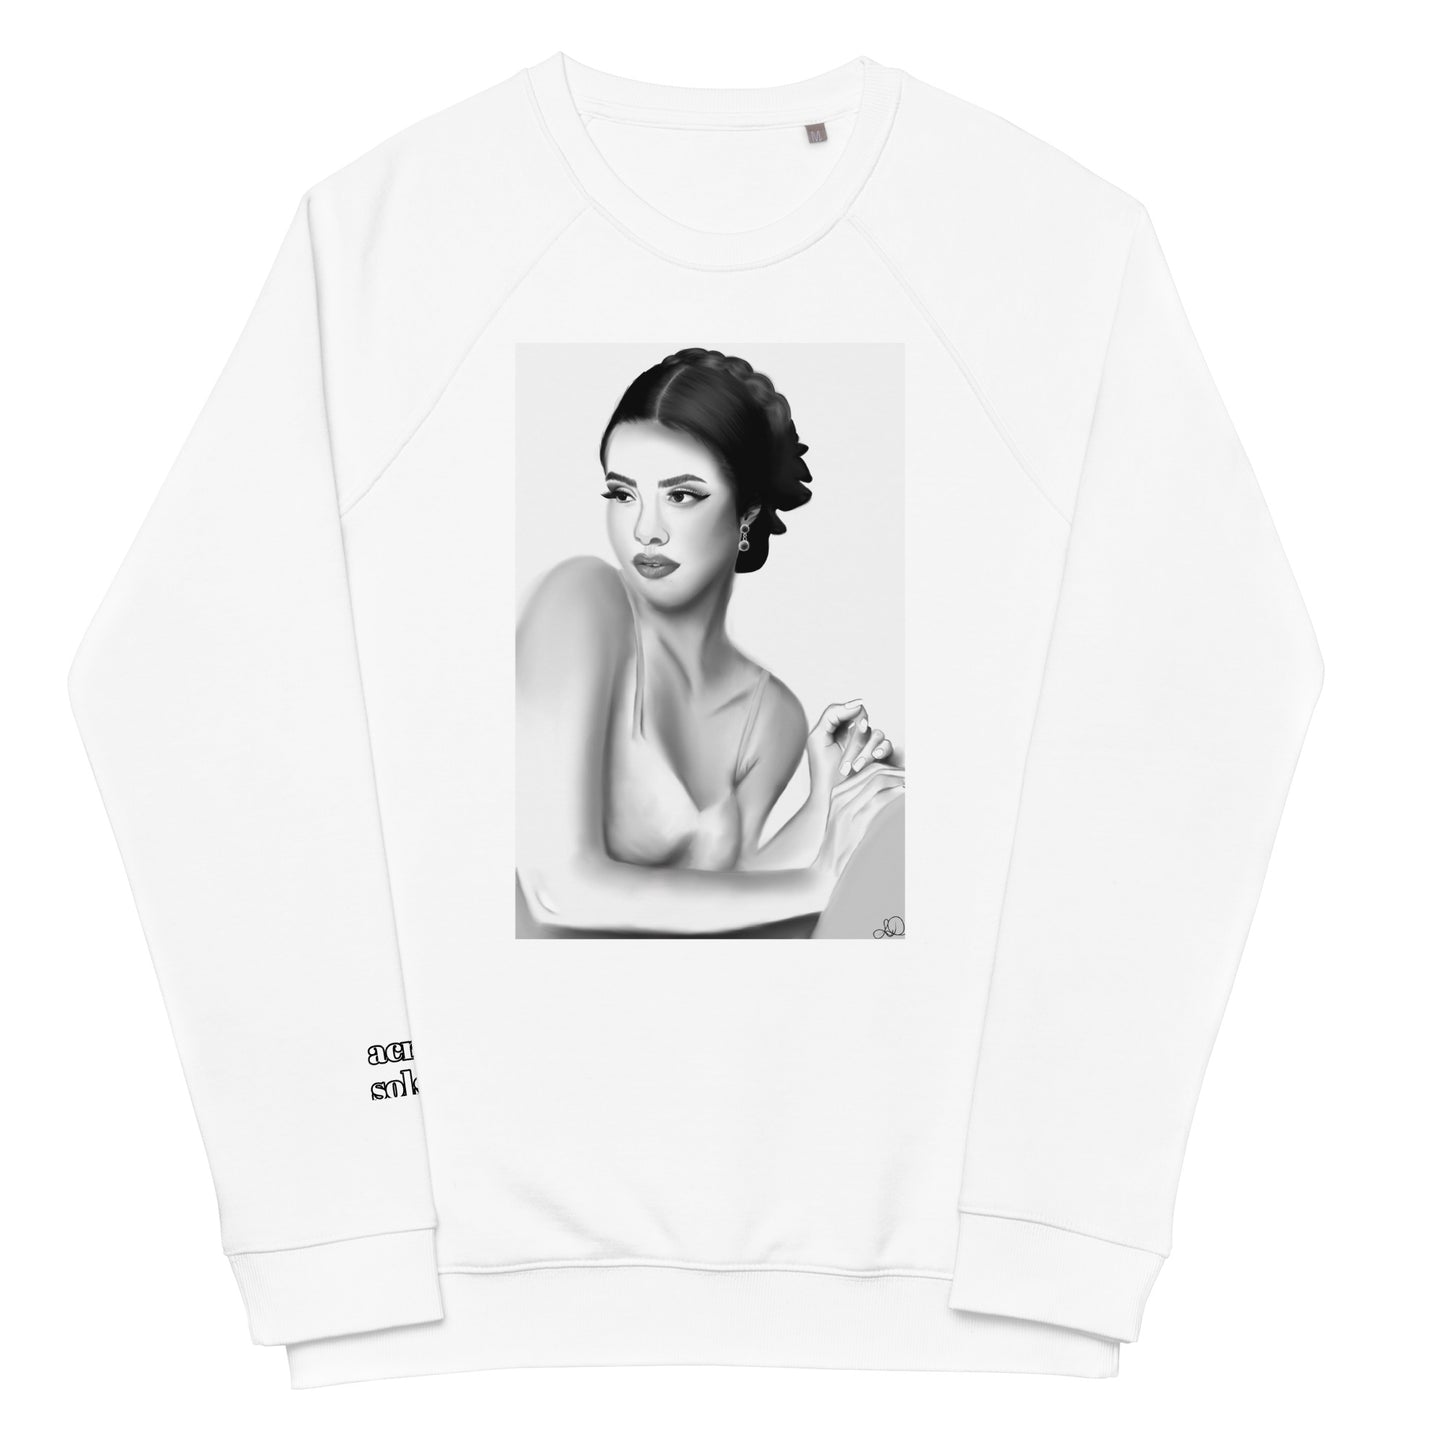 Unisex Latina Elegance Artwork Sweatshirt